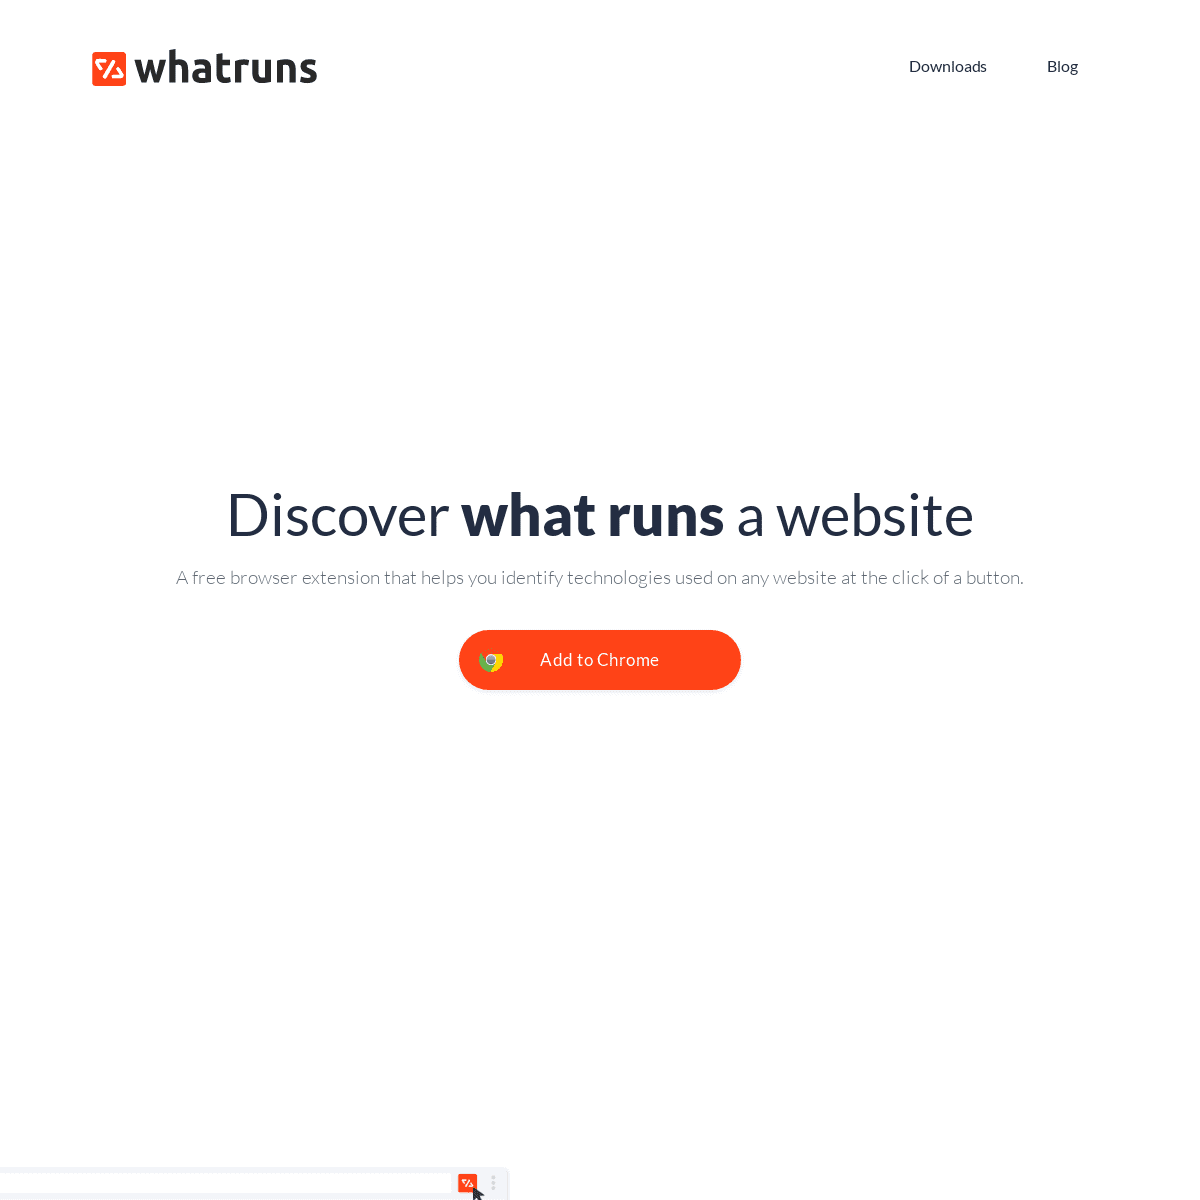 A complete backup of whatruns.com